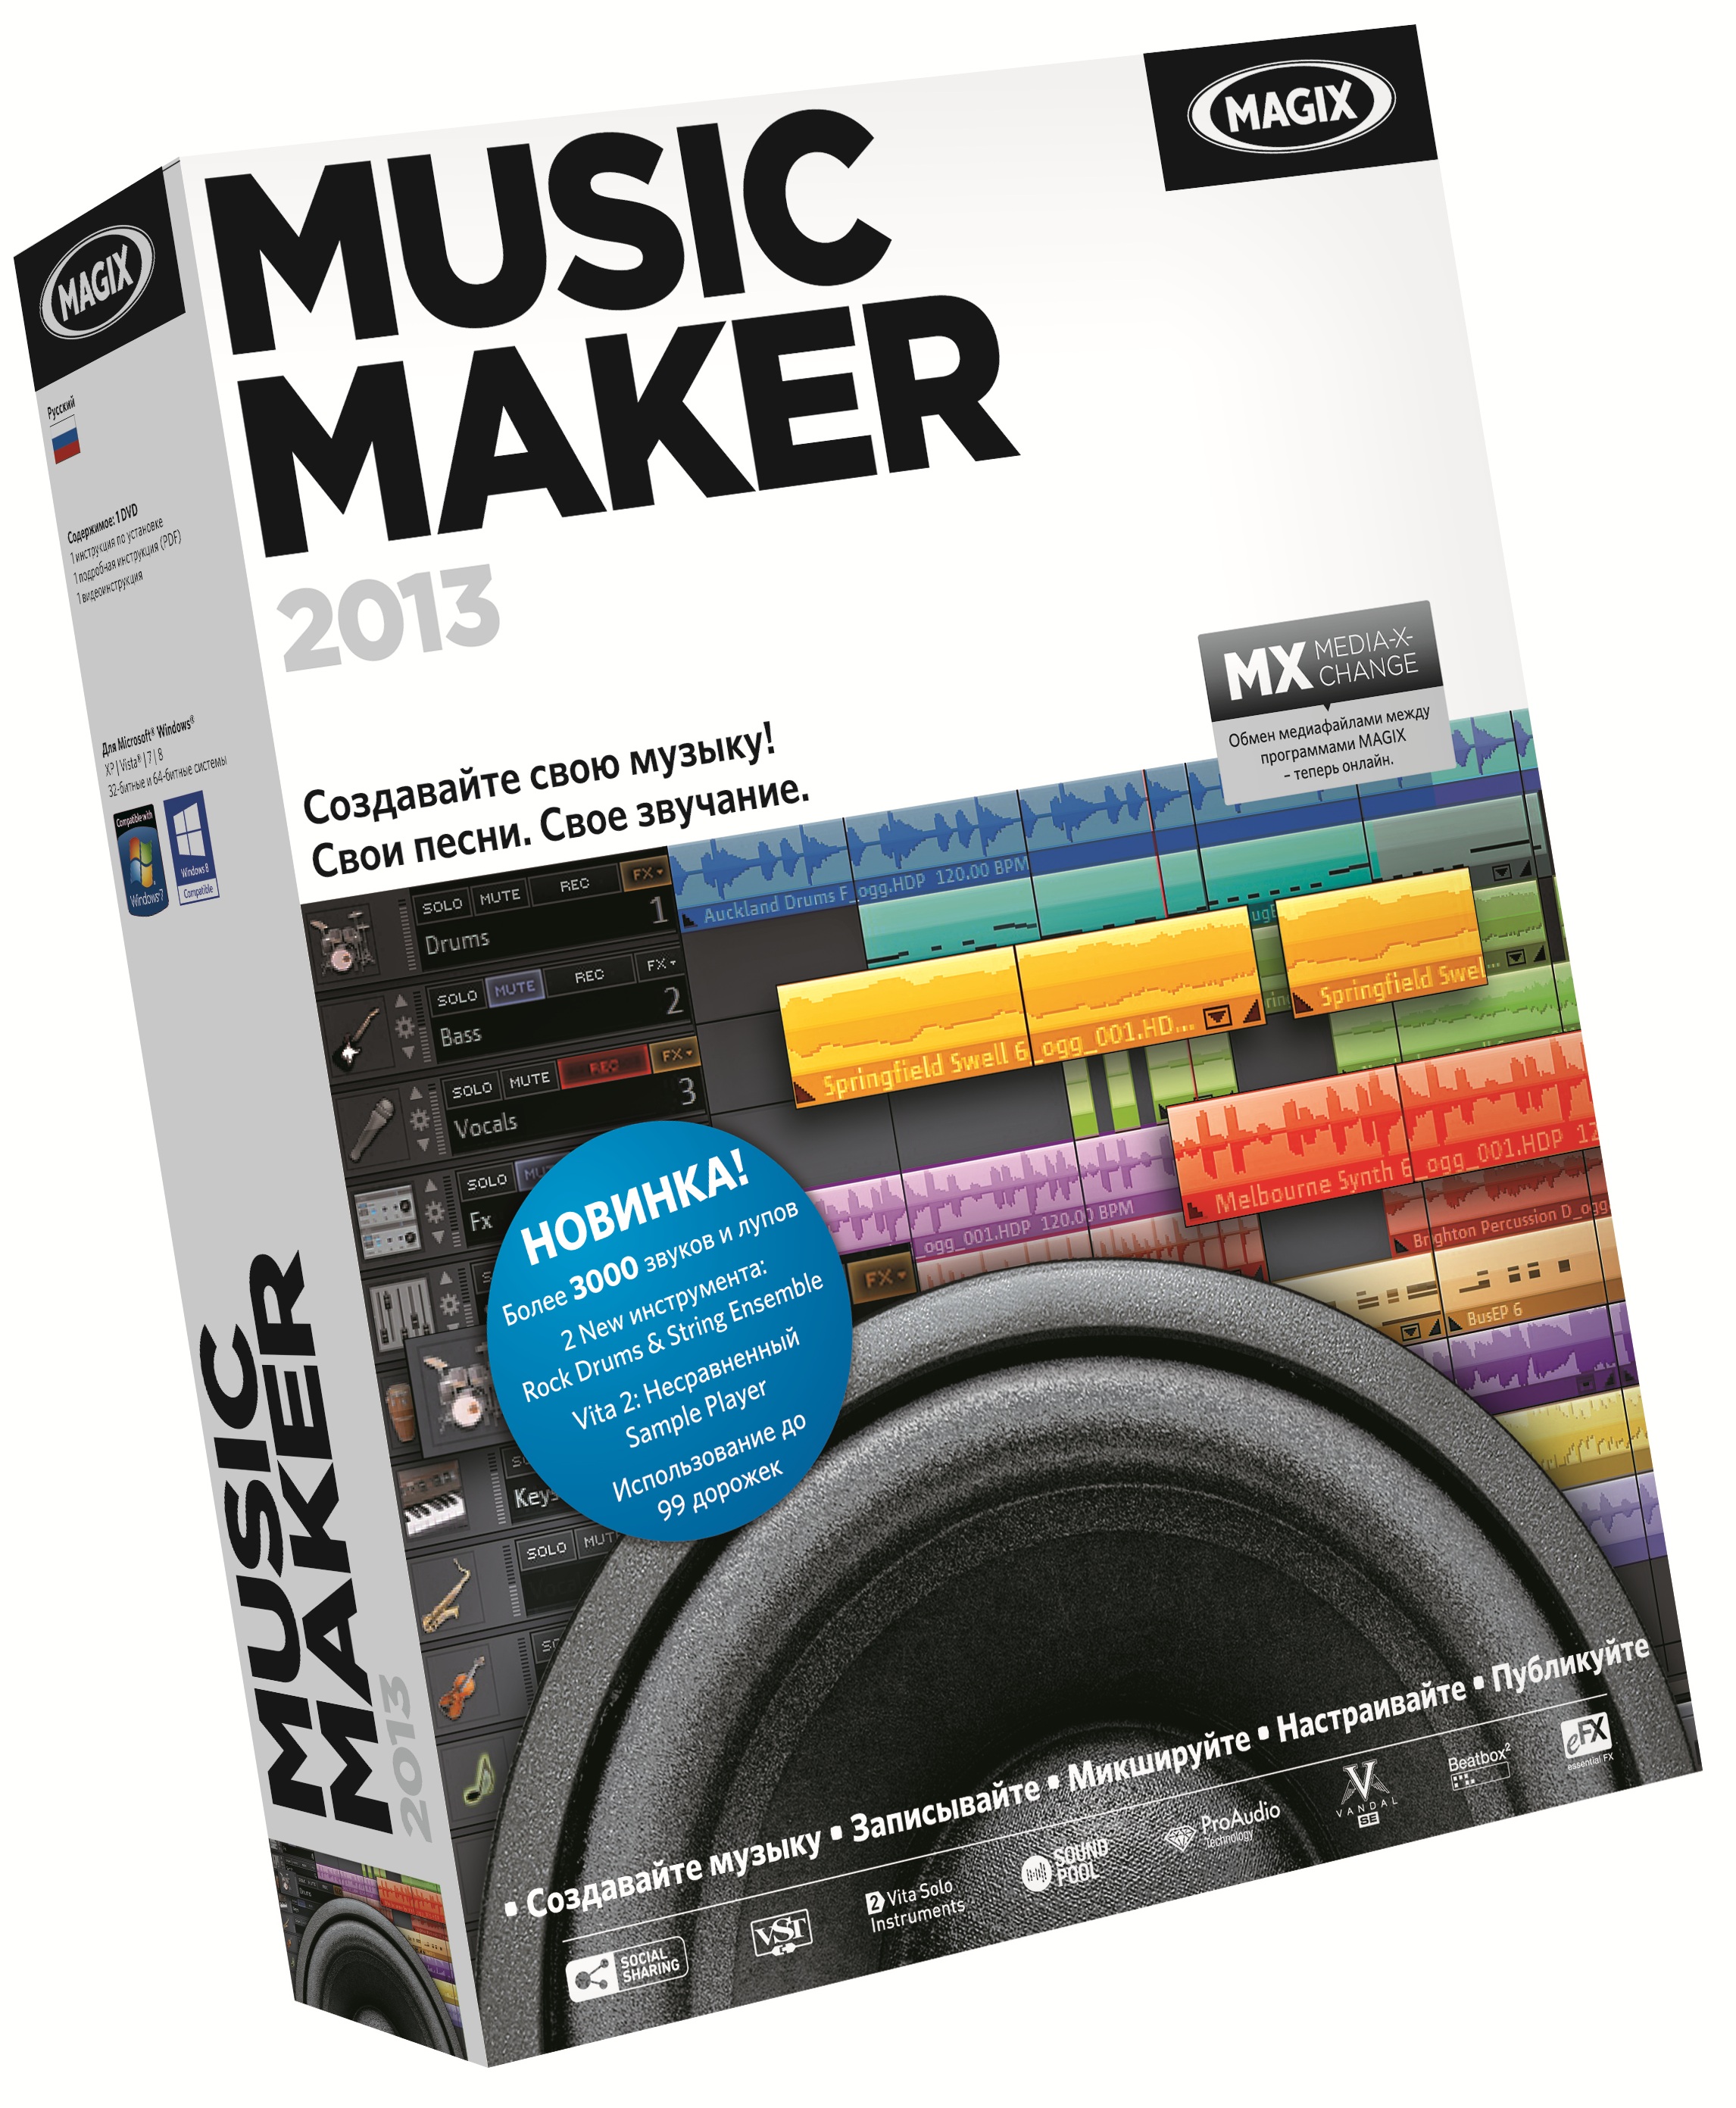 Magix music maker 2013 premium crack free download